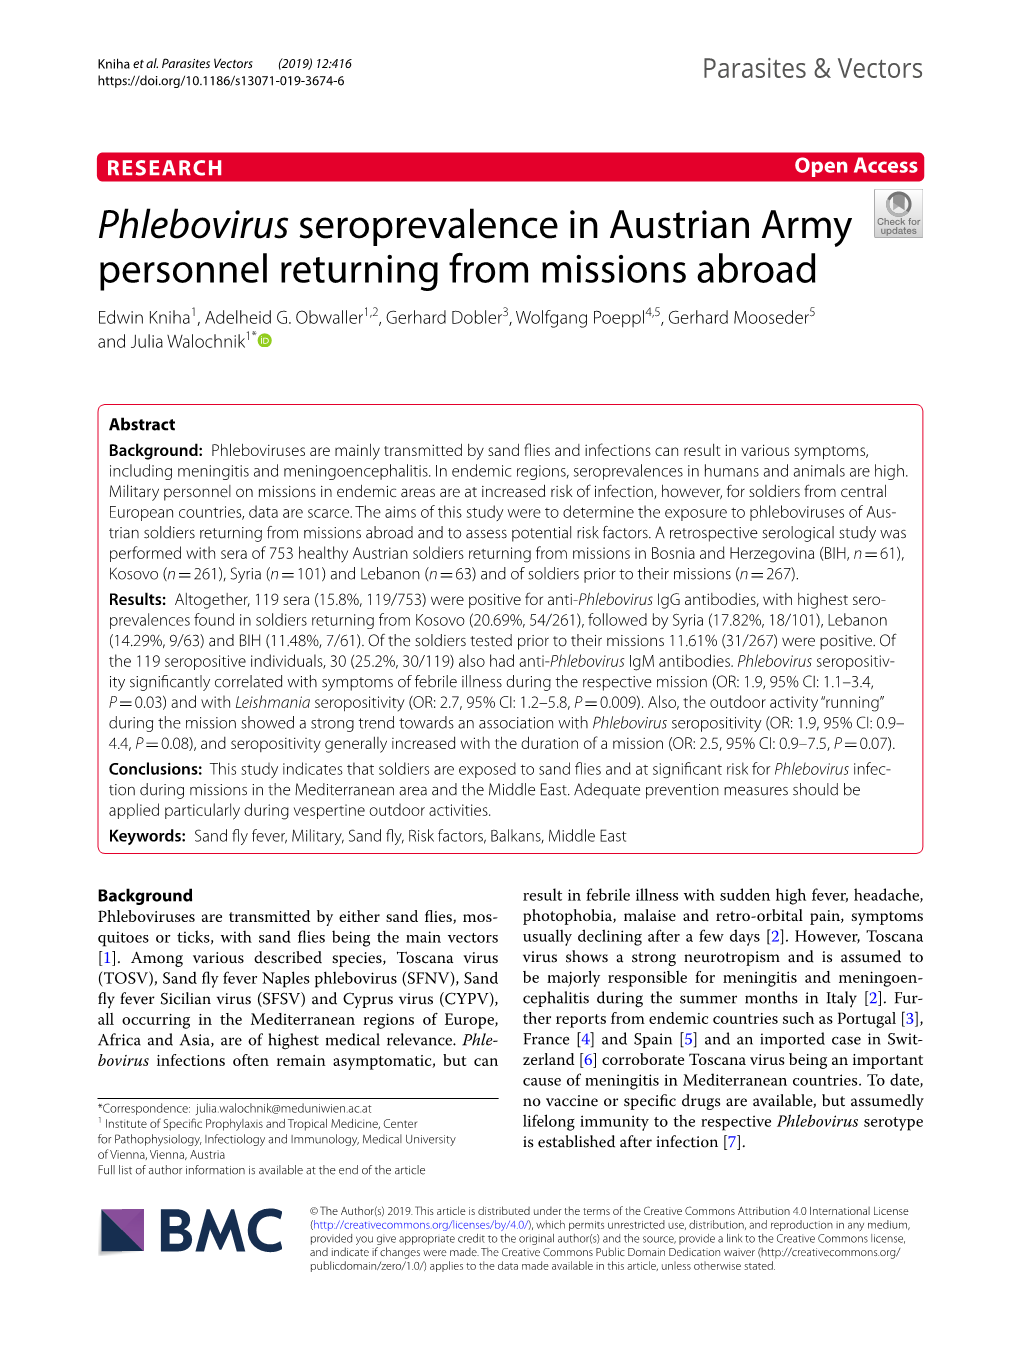 Phlebovirus Seroprevalence in Austrian Army Personnel Returning from Missions Abroad Edwin Kniha1, Adelheid G